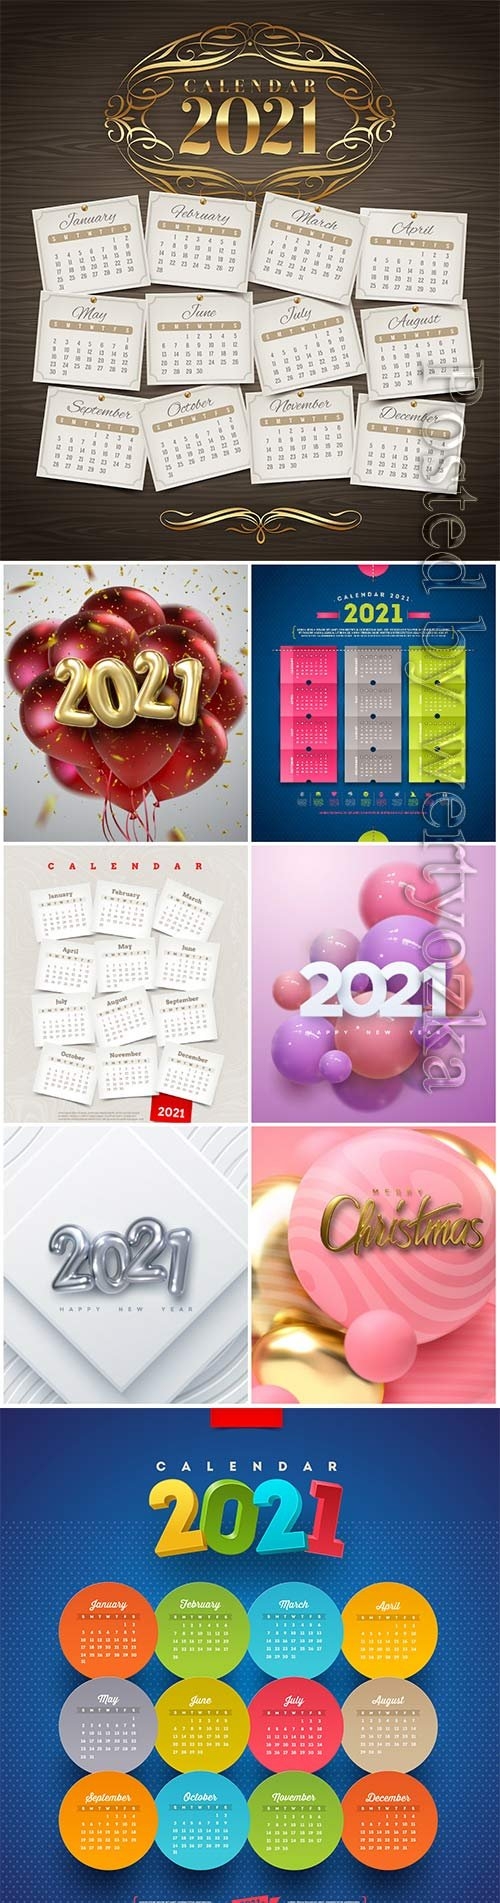 Desk calendar 2021 template design for new year vol 10